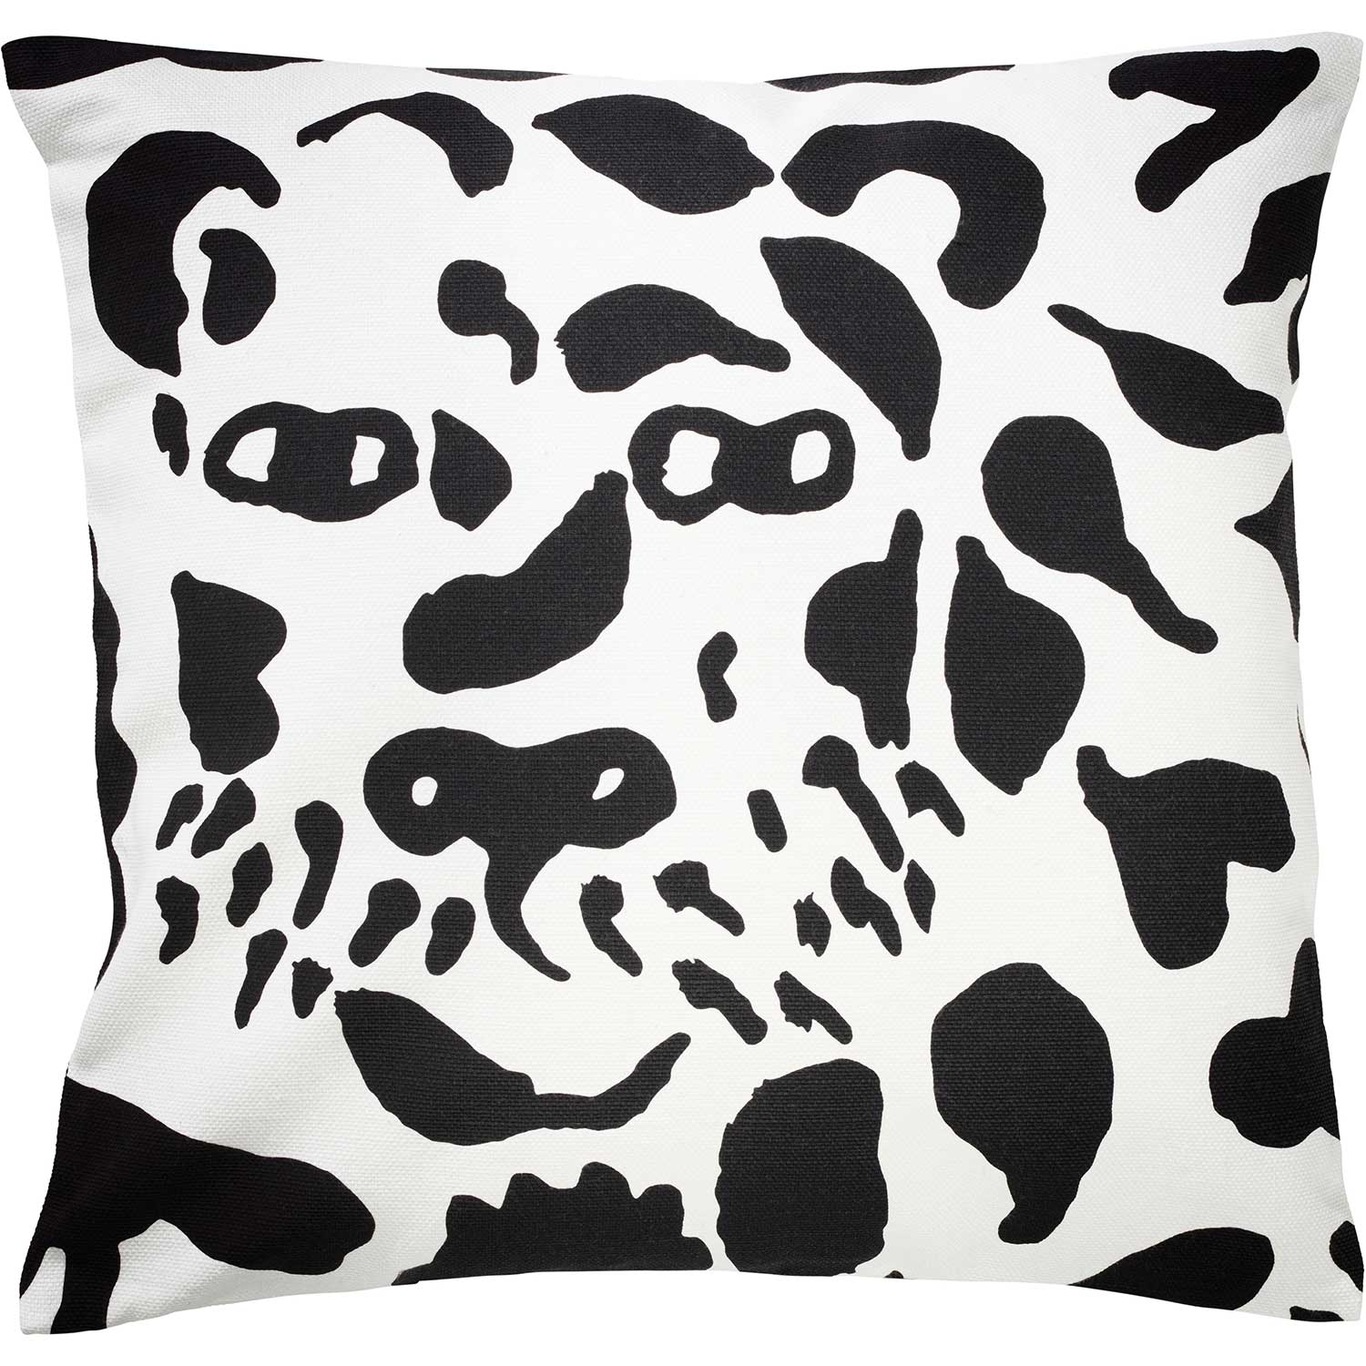 Oiva Toikka Collection Cushion Cover 47x47 cm, Cheetah Black